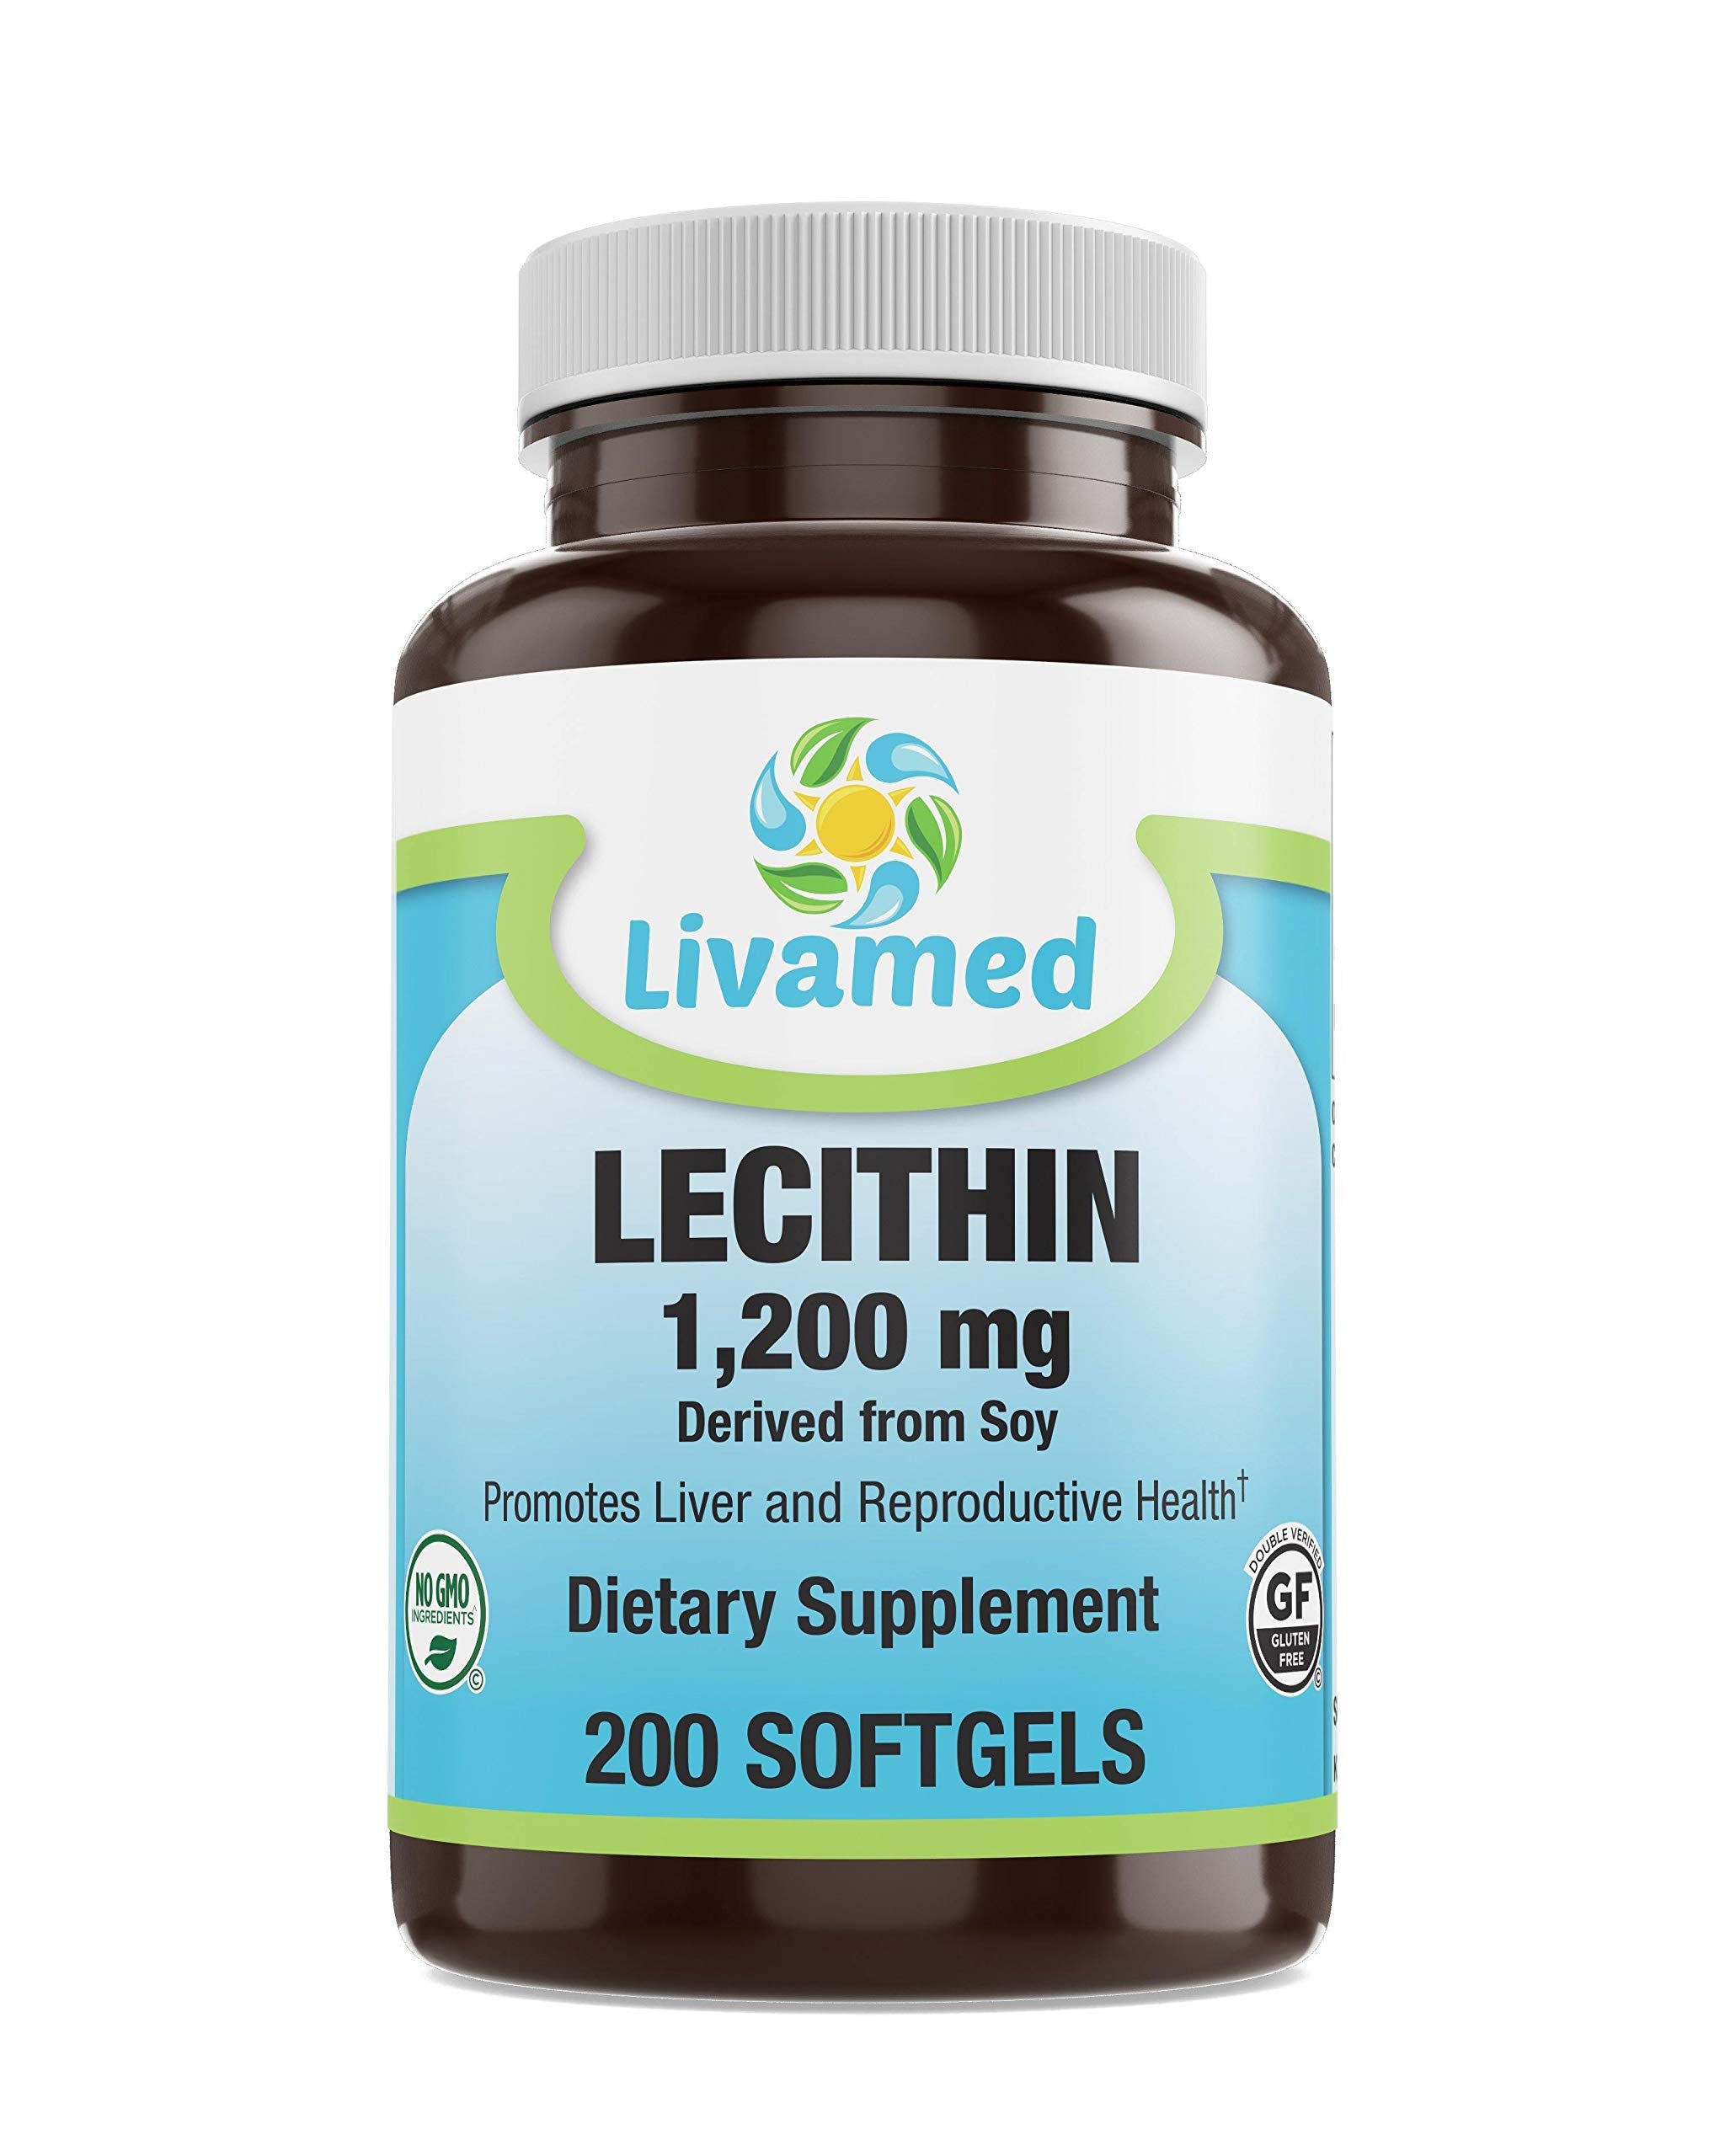 Livamed - Lecithin 1,200 mg Softgels 200 Count